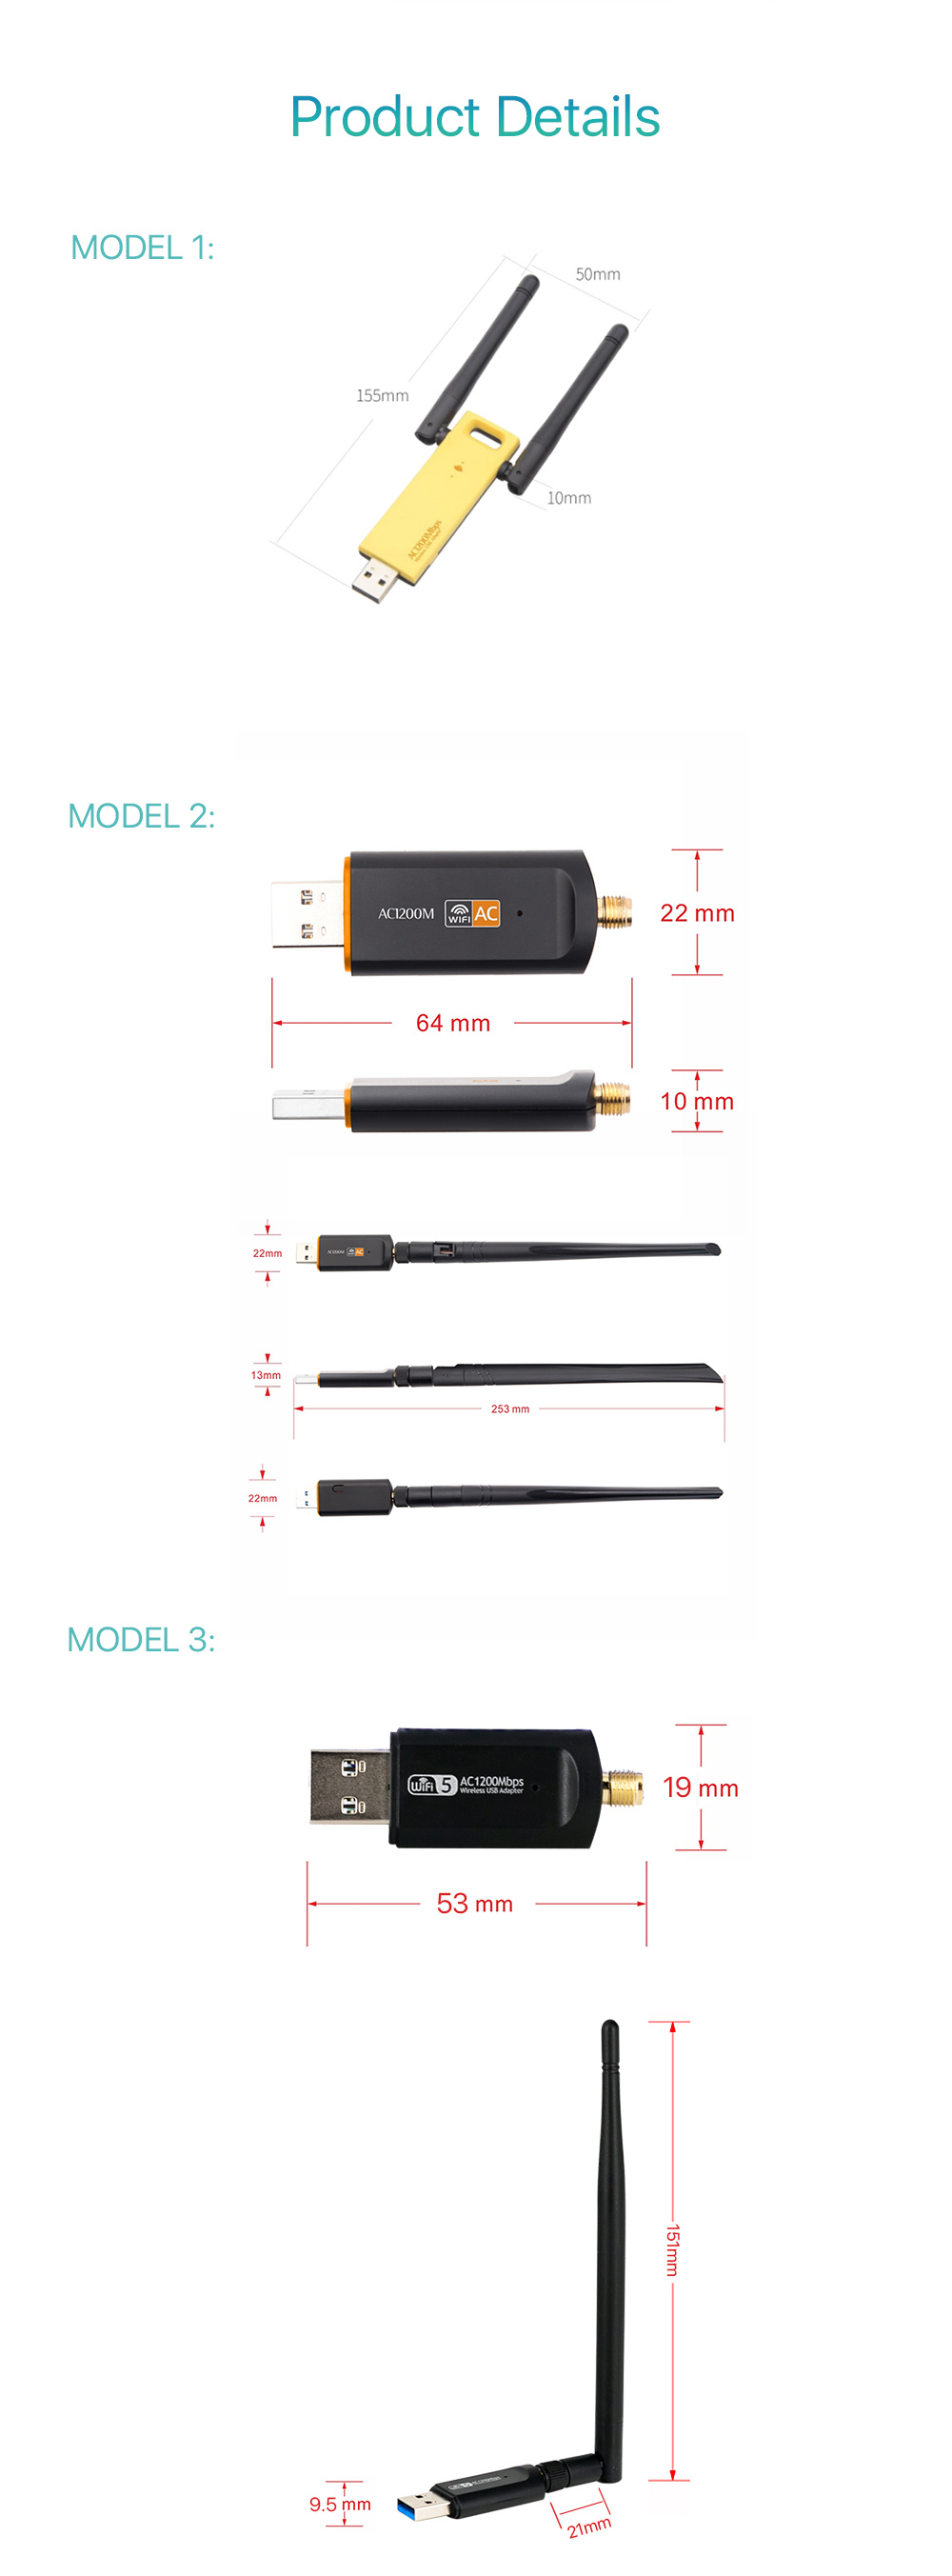 Lyngou LG516 Mini USB Wireless Adapter 1200Mbps WiFi Receiver Wireless with Antenna USB 2.0 Network Card